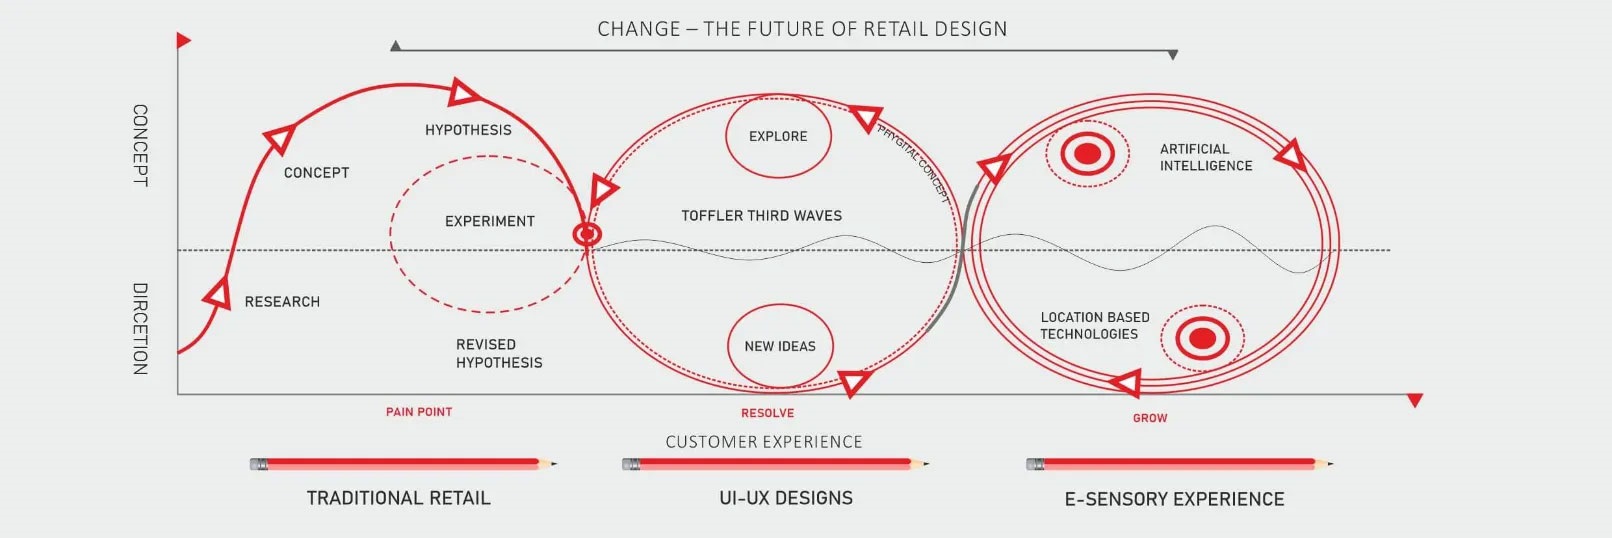 Change - the future of retail design